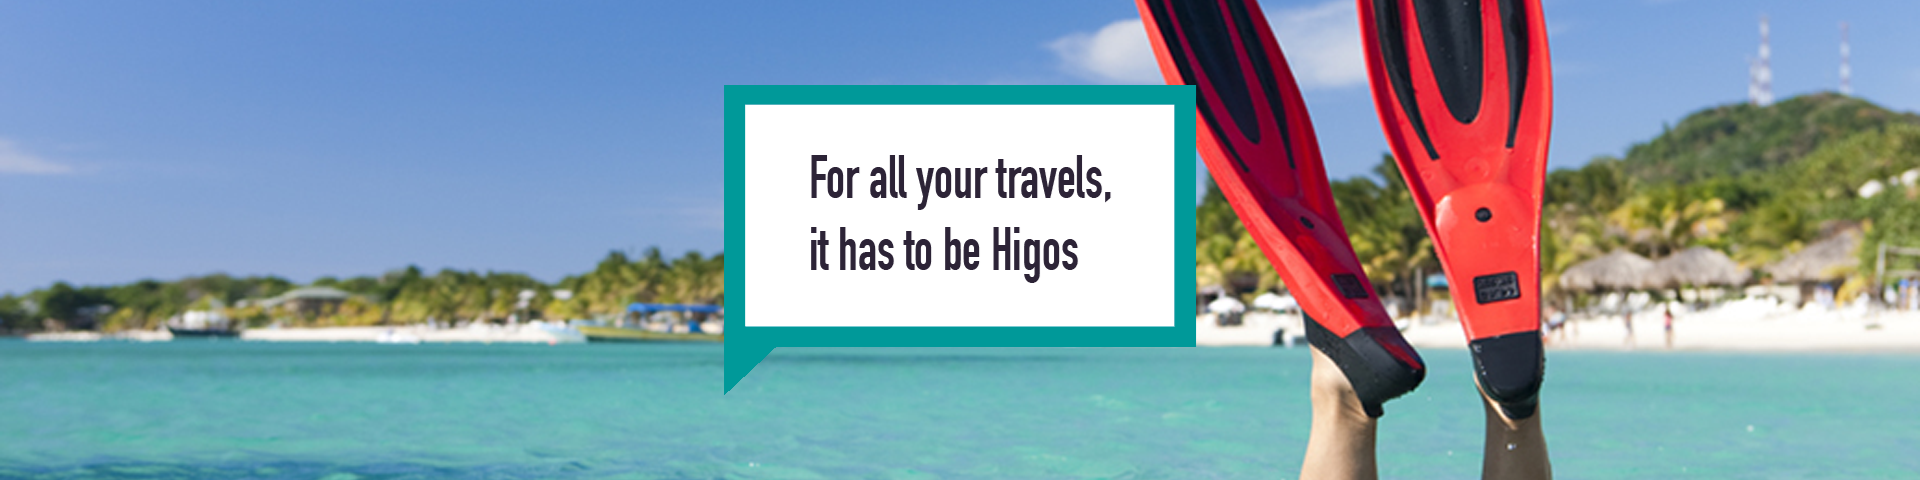 Higos personal insurance travel snorkelling